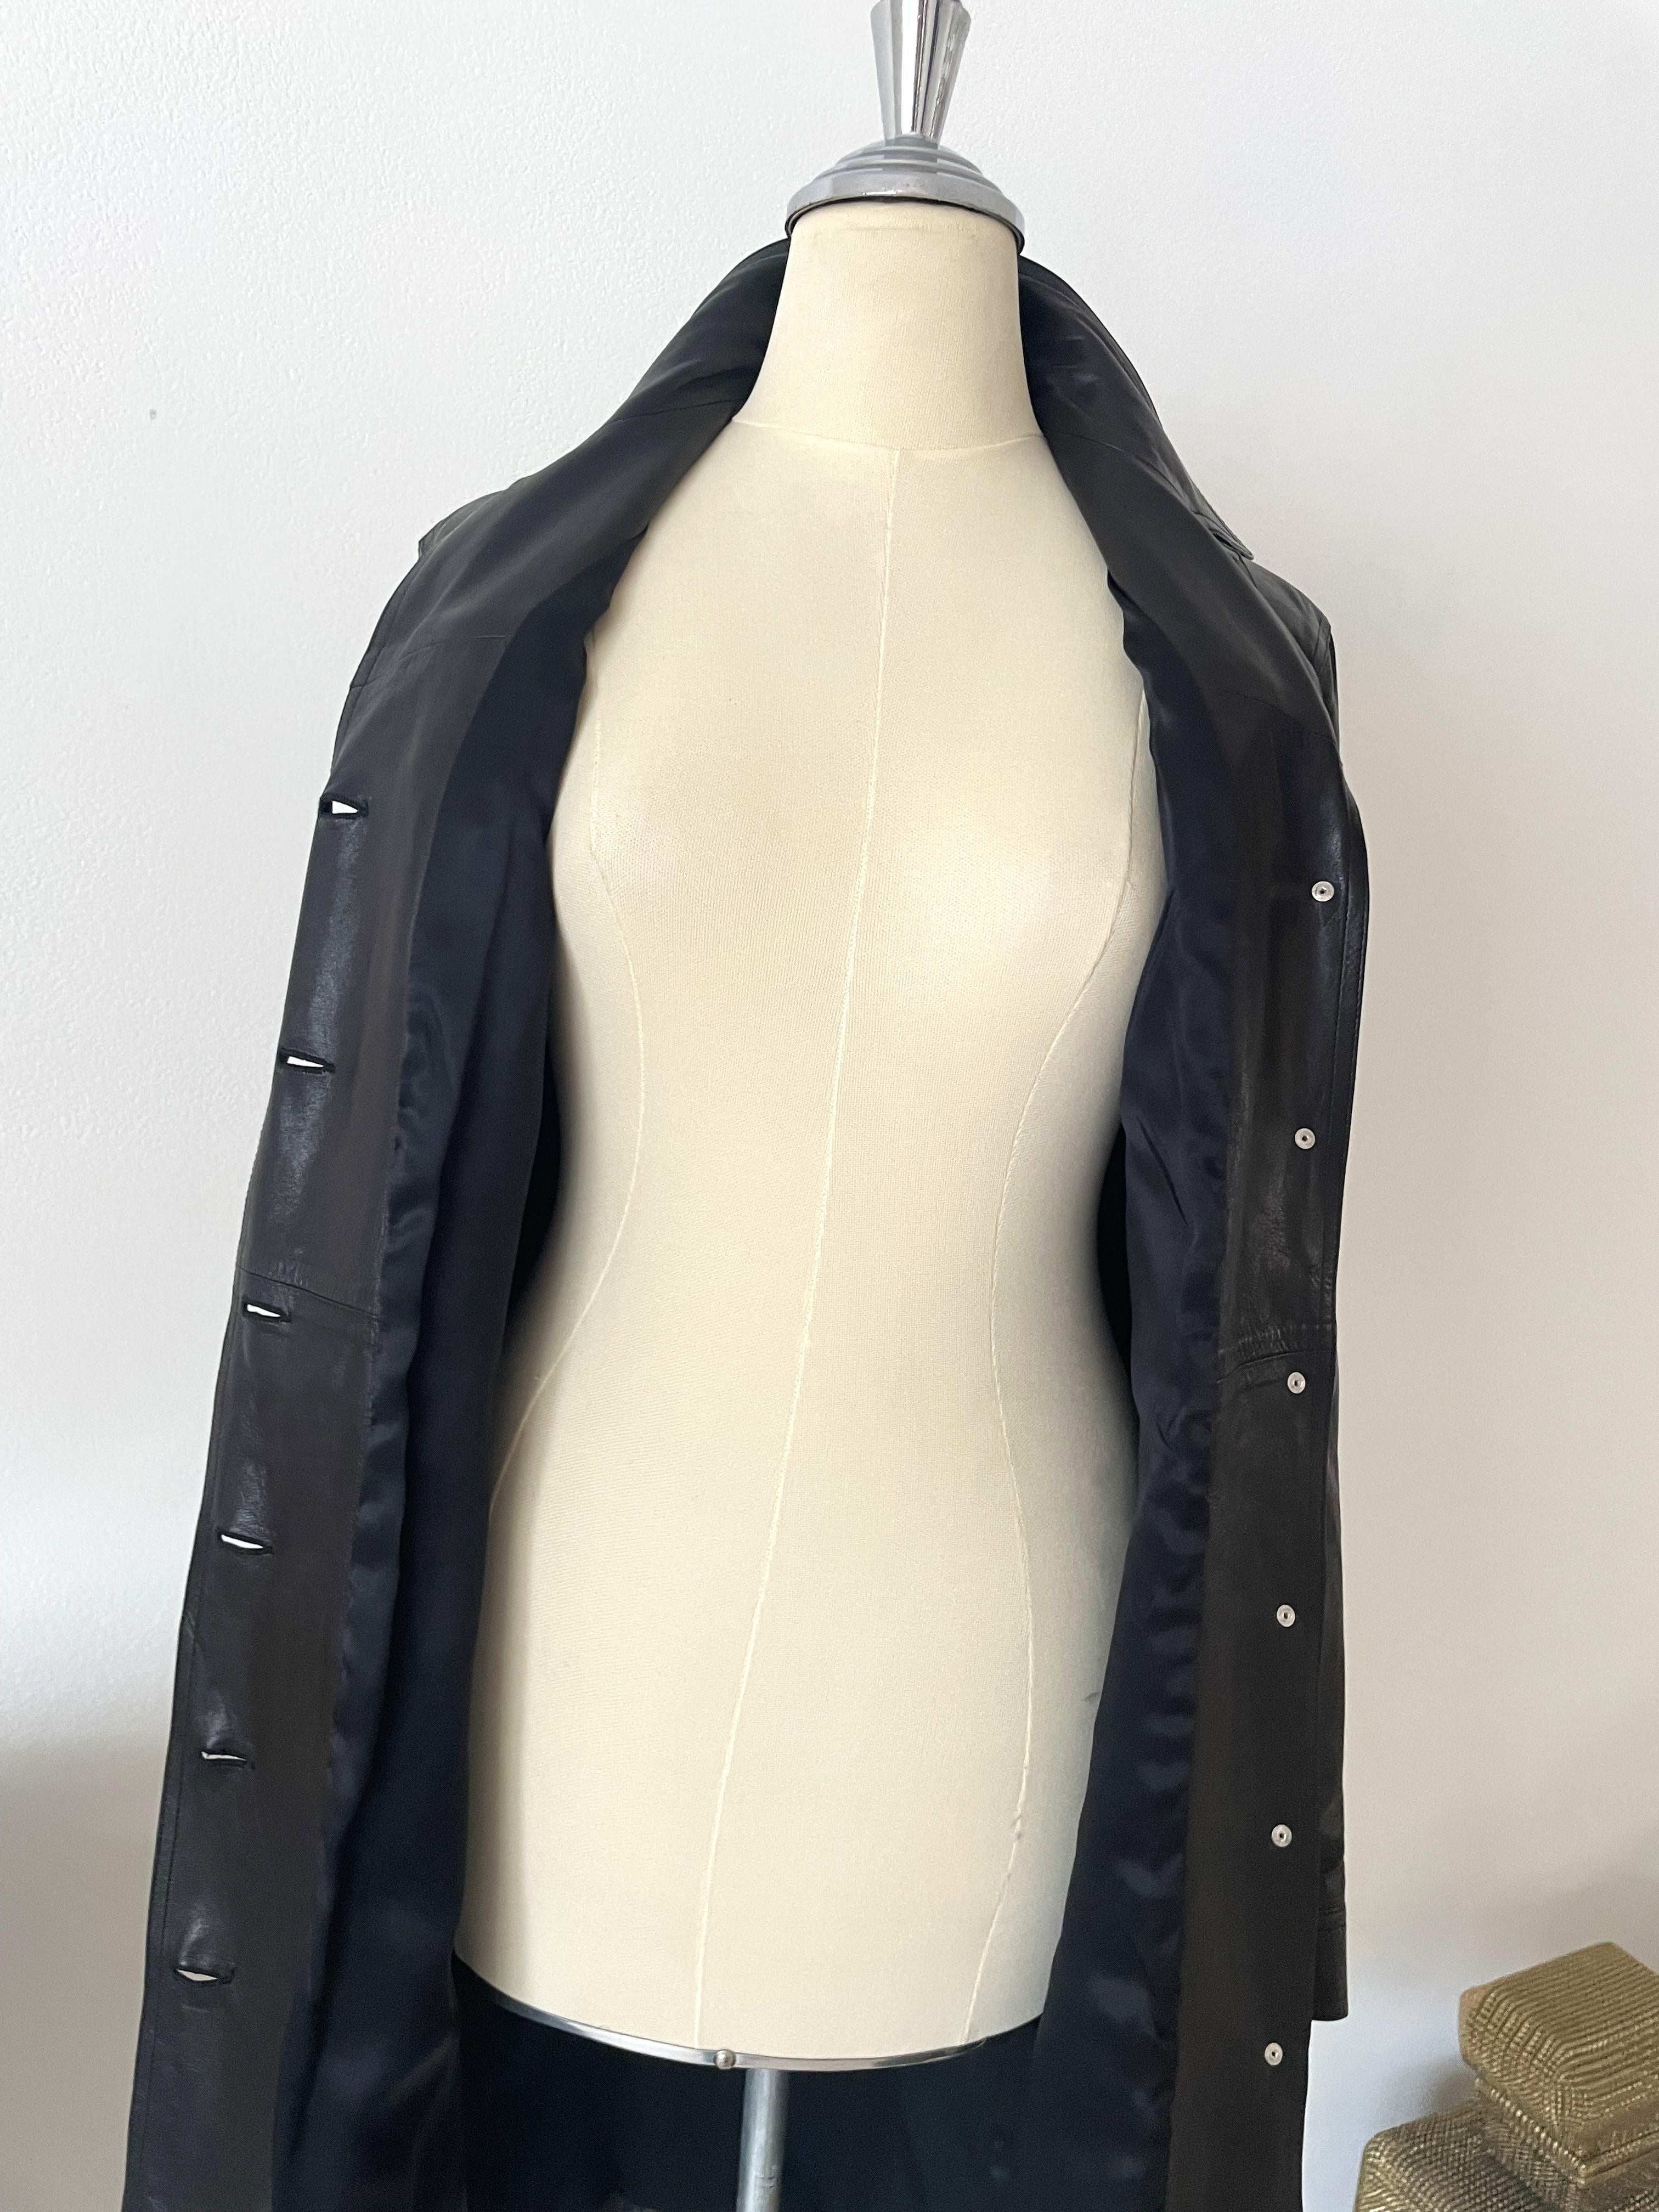 Christian Dior Lambs Leather Black Coat Dress Vintage For Sale 5